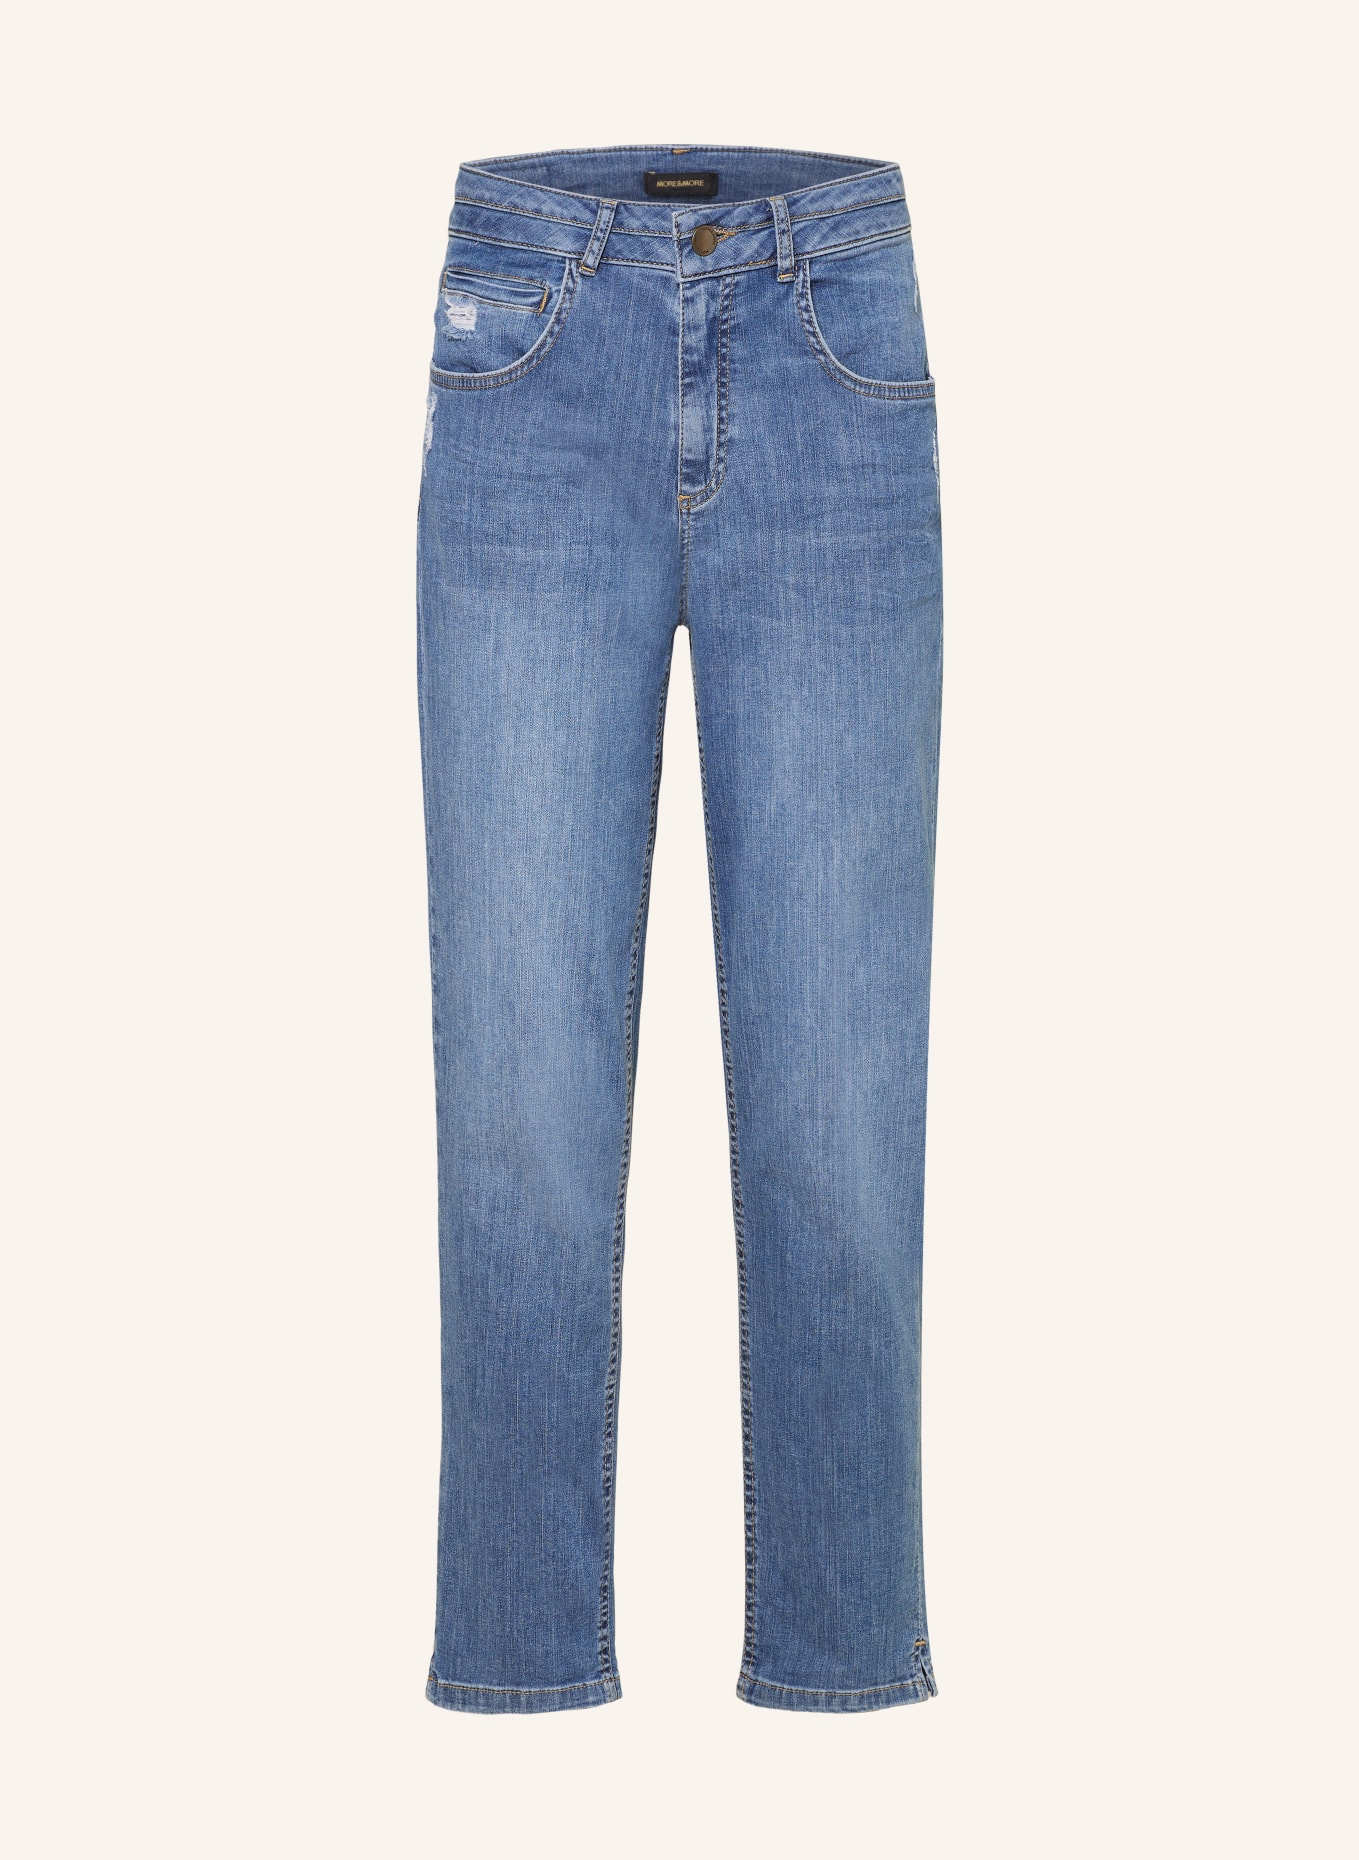 MORE & MORE Mom Jeans, Farbe: 0962 middle blue denim (Bild 1)